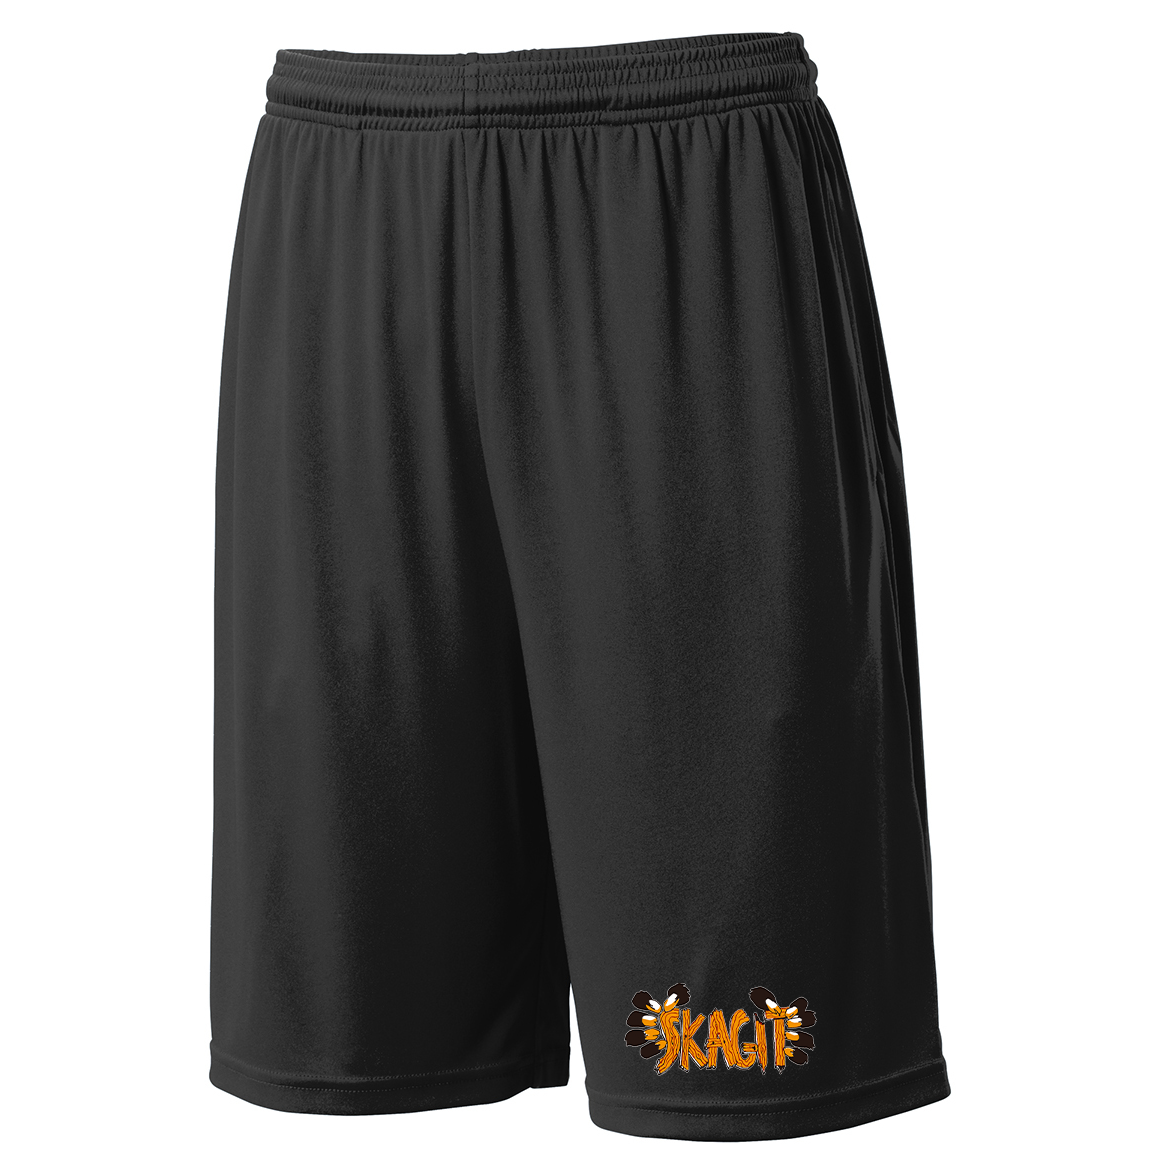 Skagit Volleyball Shorts